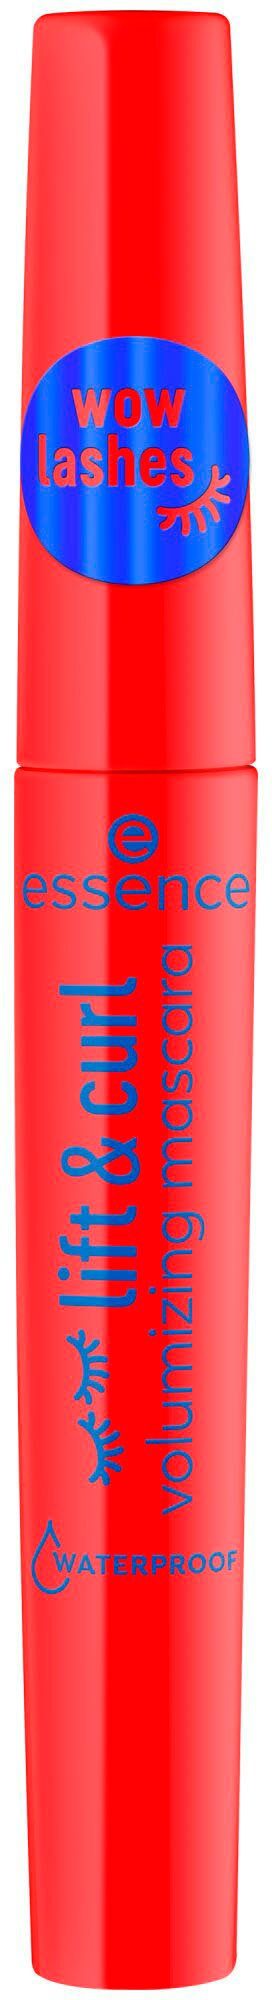 Essence Mascara lift mascara & 4-tlg. volumizing curl WATERPROOF